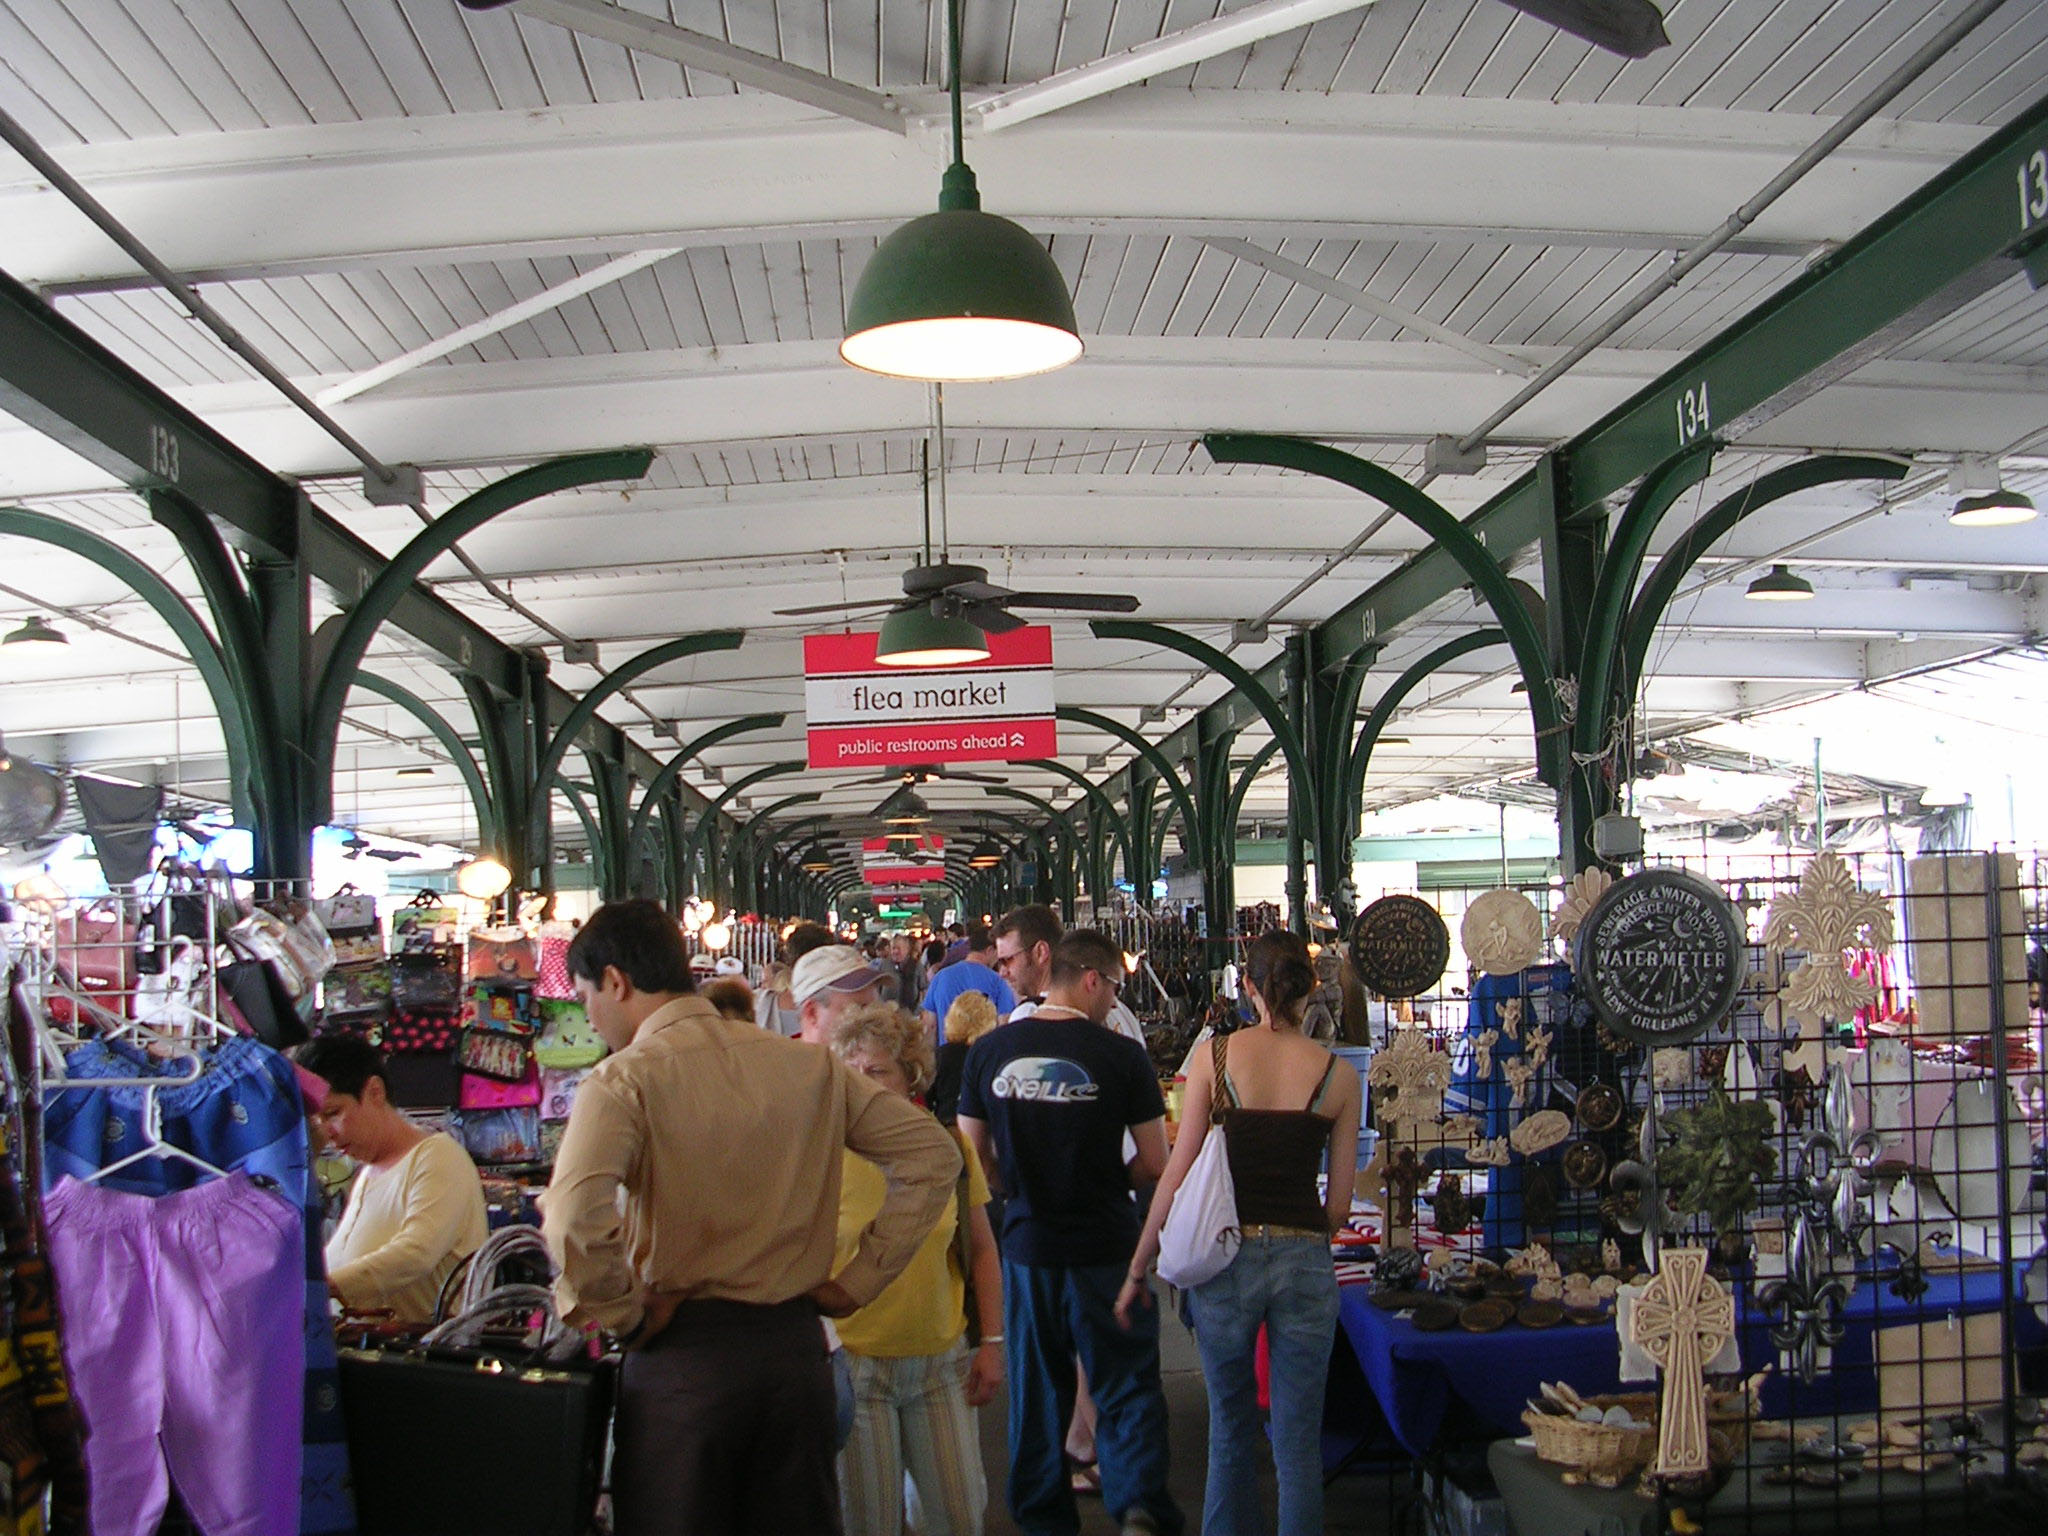 French Flea market in New Orleans